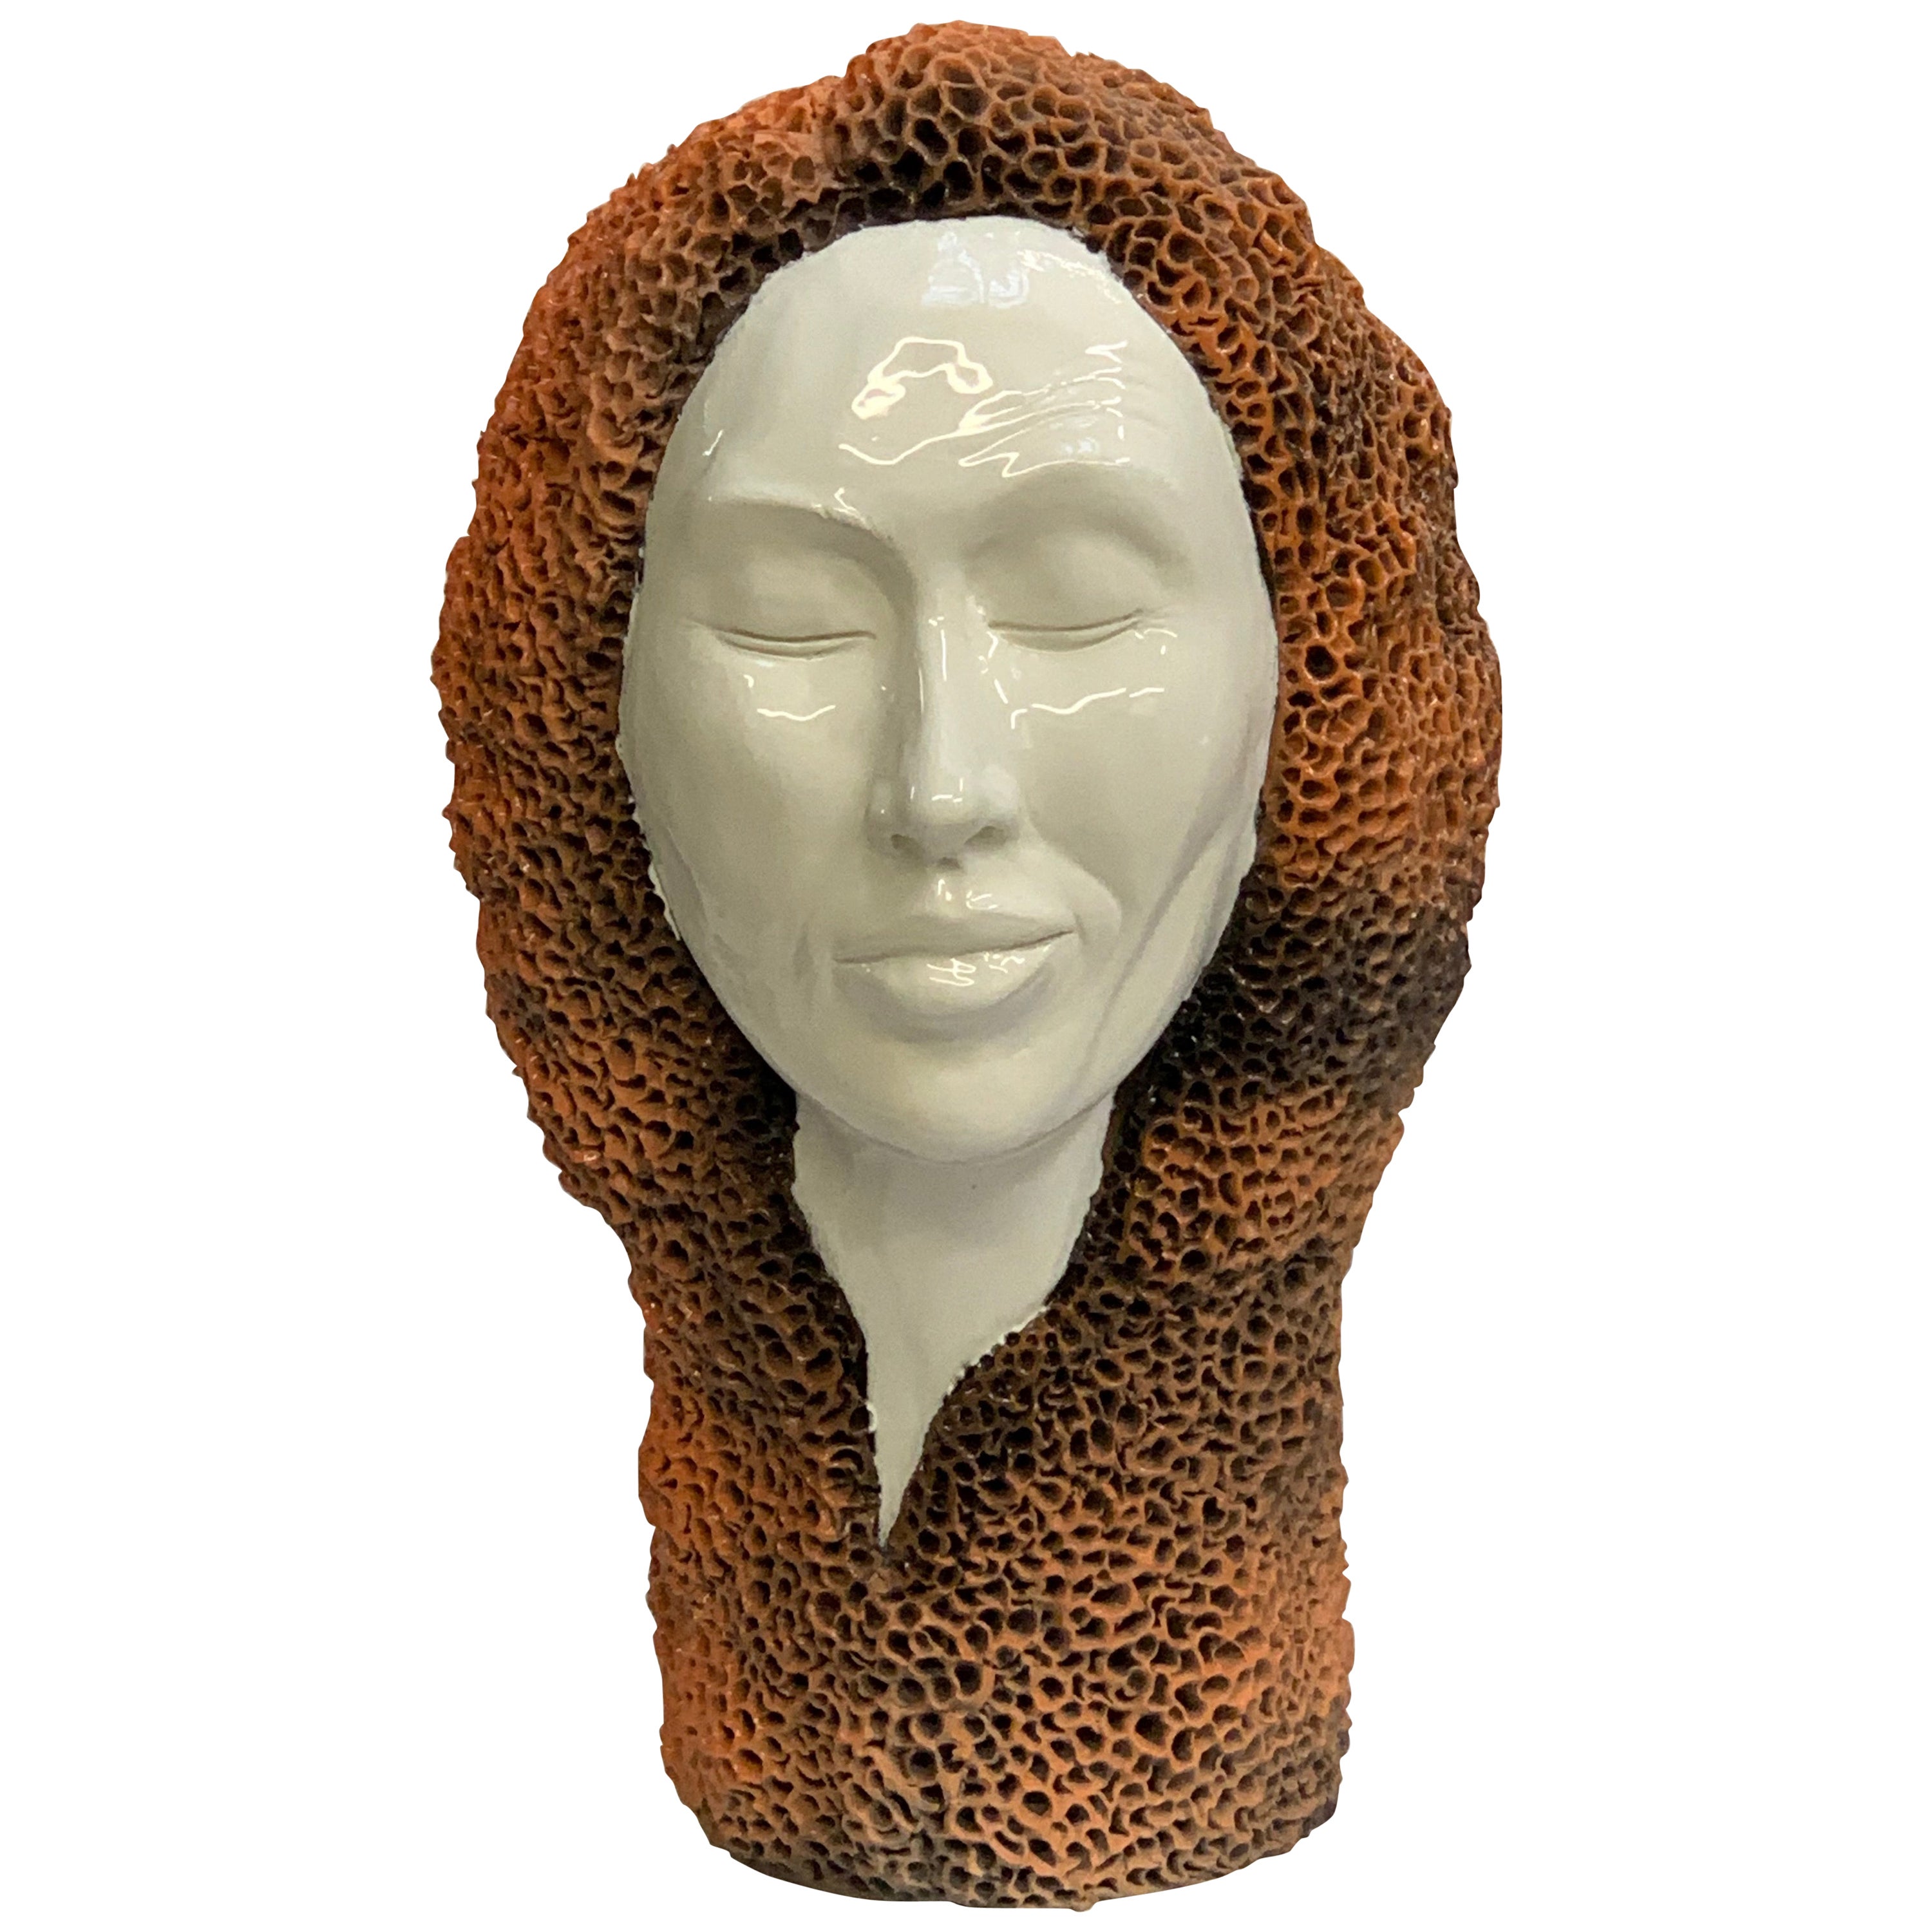 Woman's Head Sponge Decorative Ceramic Piece, Handmade Italy, 2021, Hand-Crafted